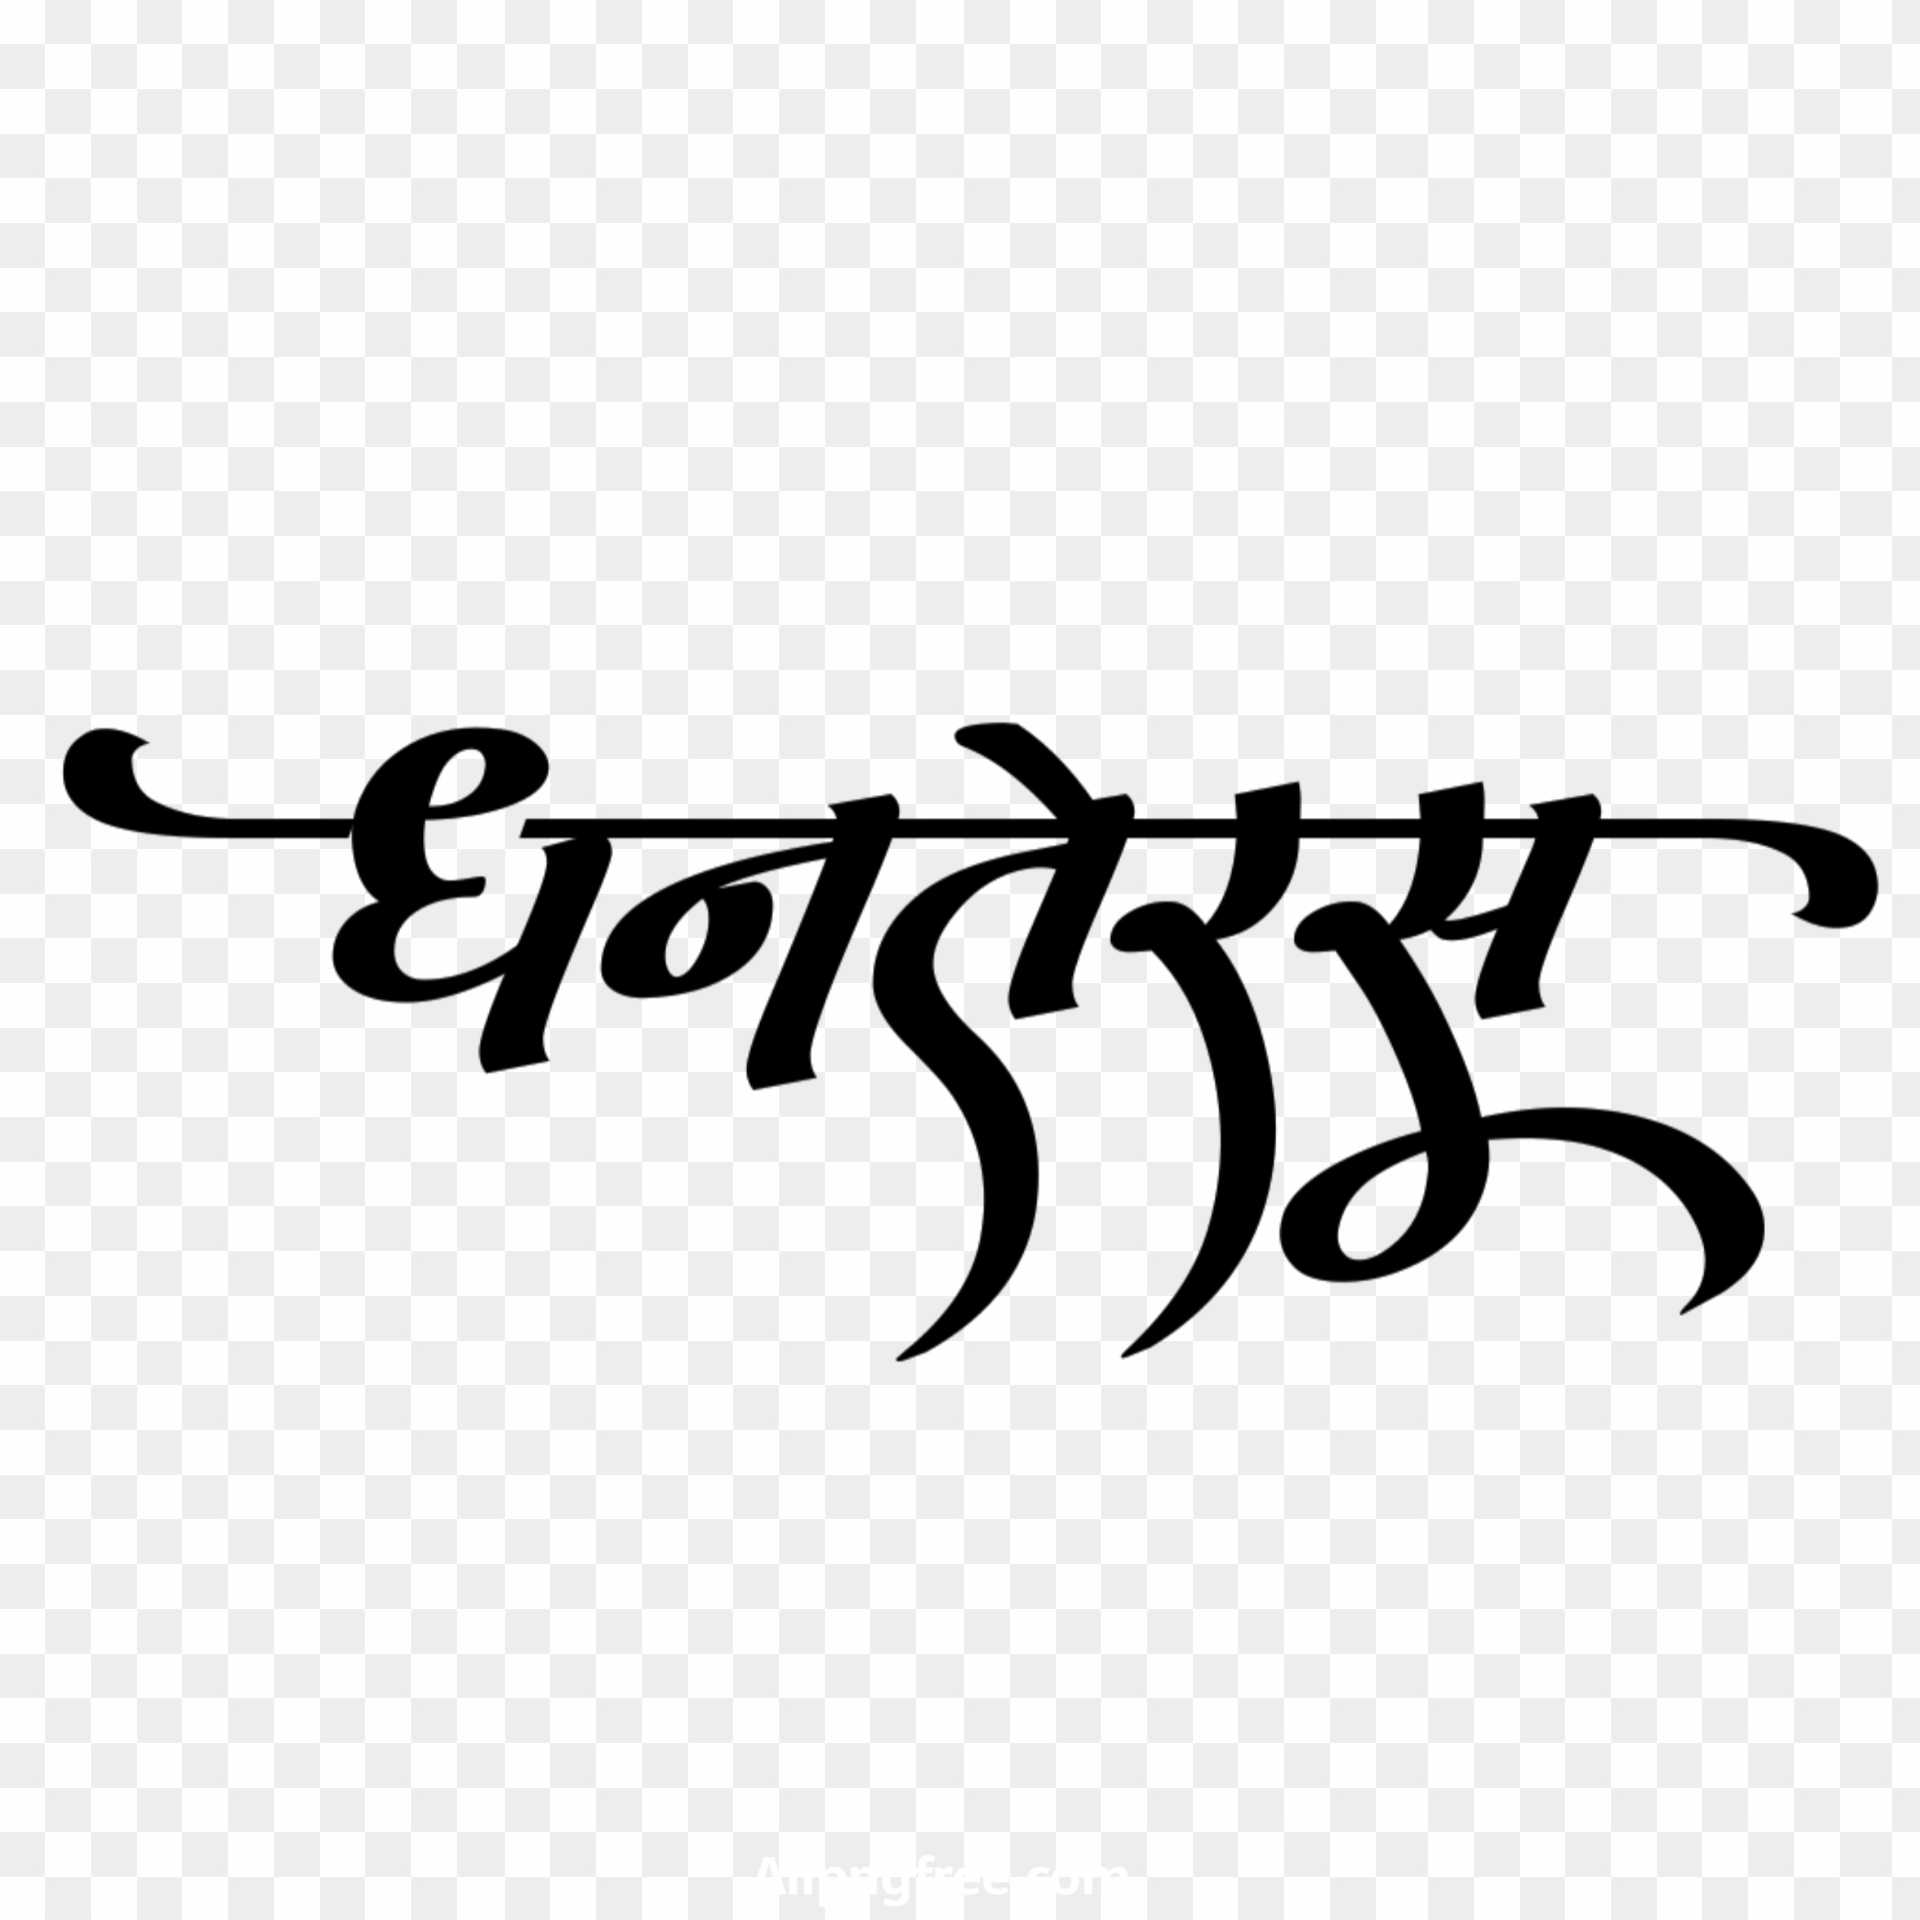 Dhanteras calligraphy hindi text PNG images 